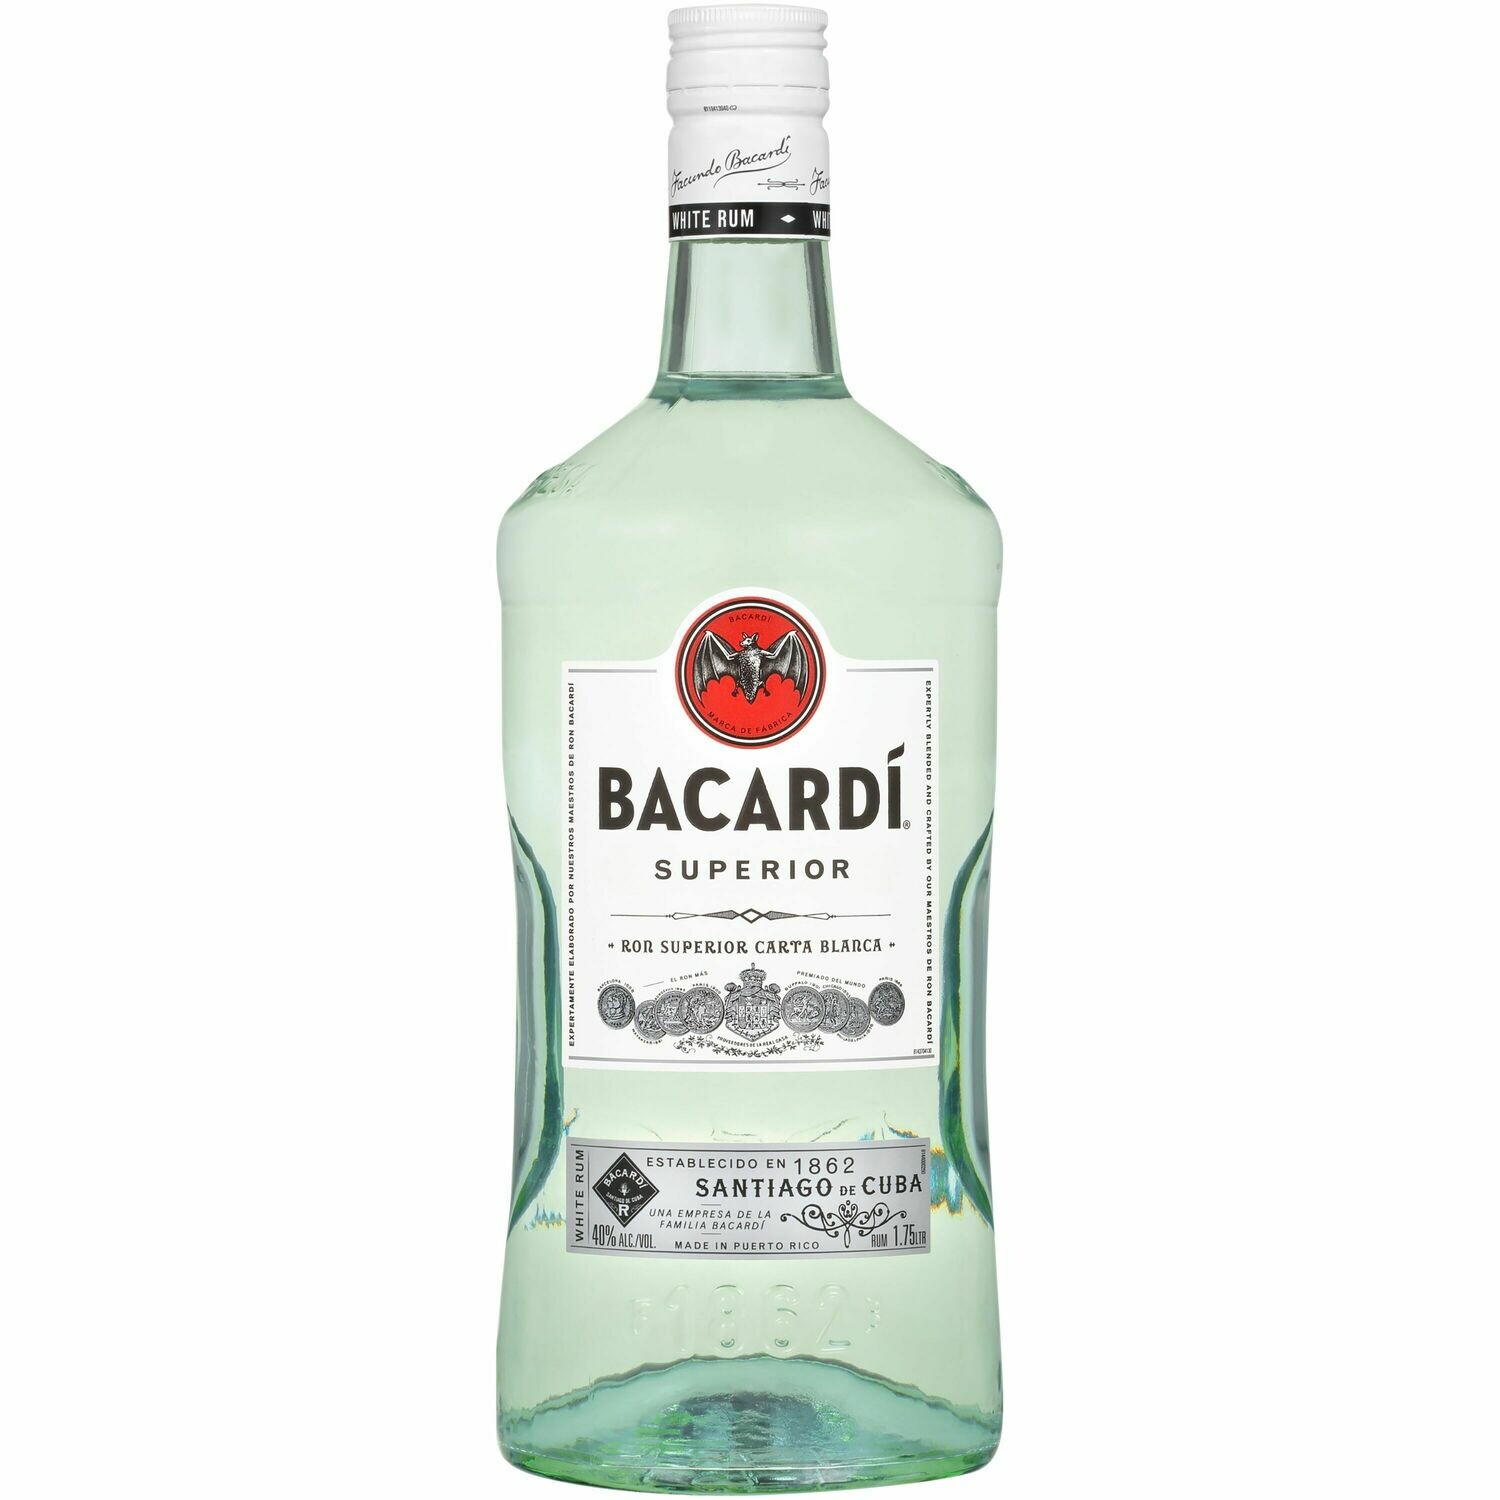 Bacardi Rum 1.75L